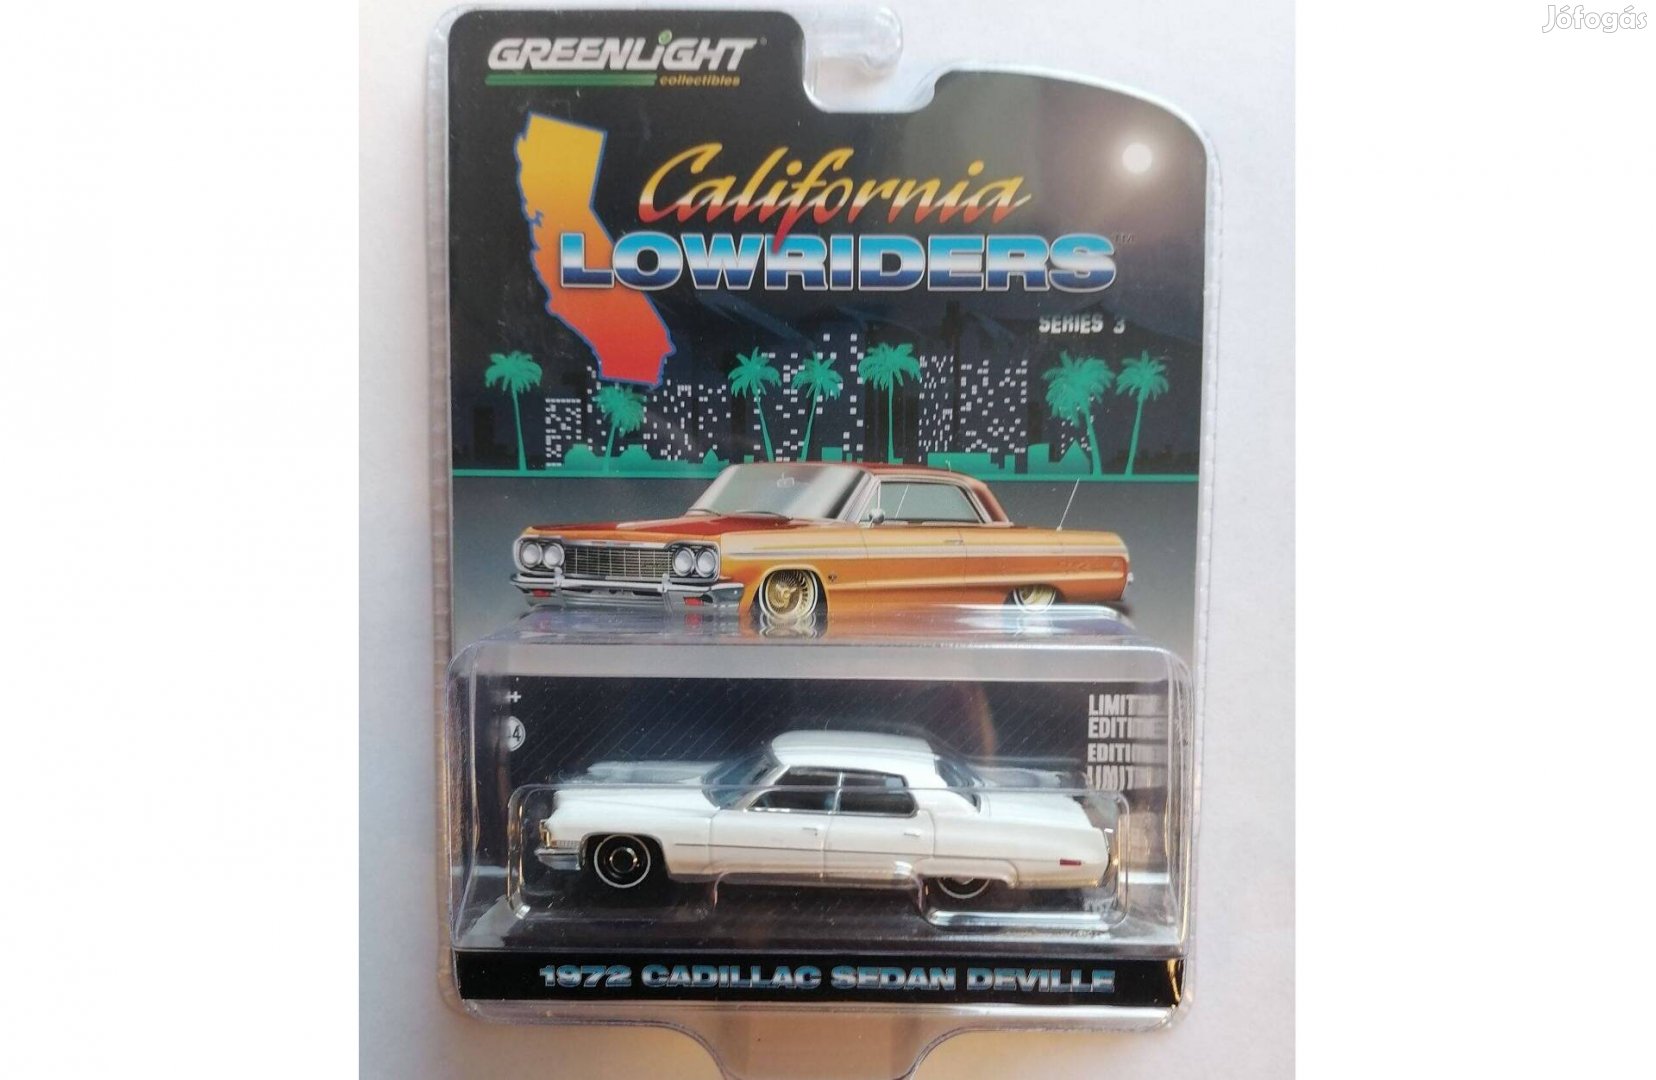 Greenlight 1972 cadillac sedan deville california lowriders series 3